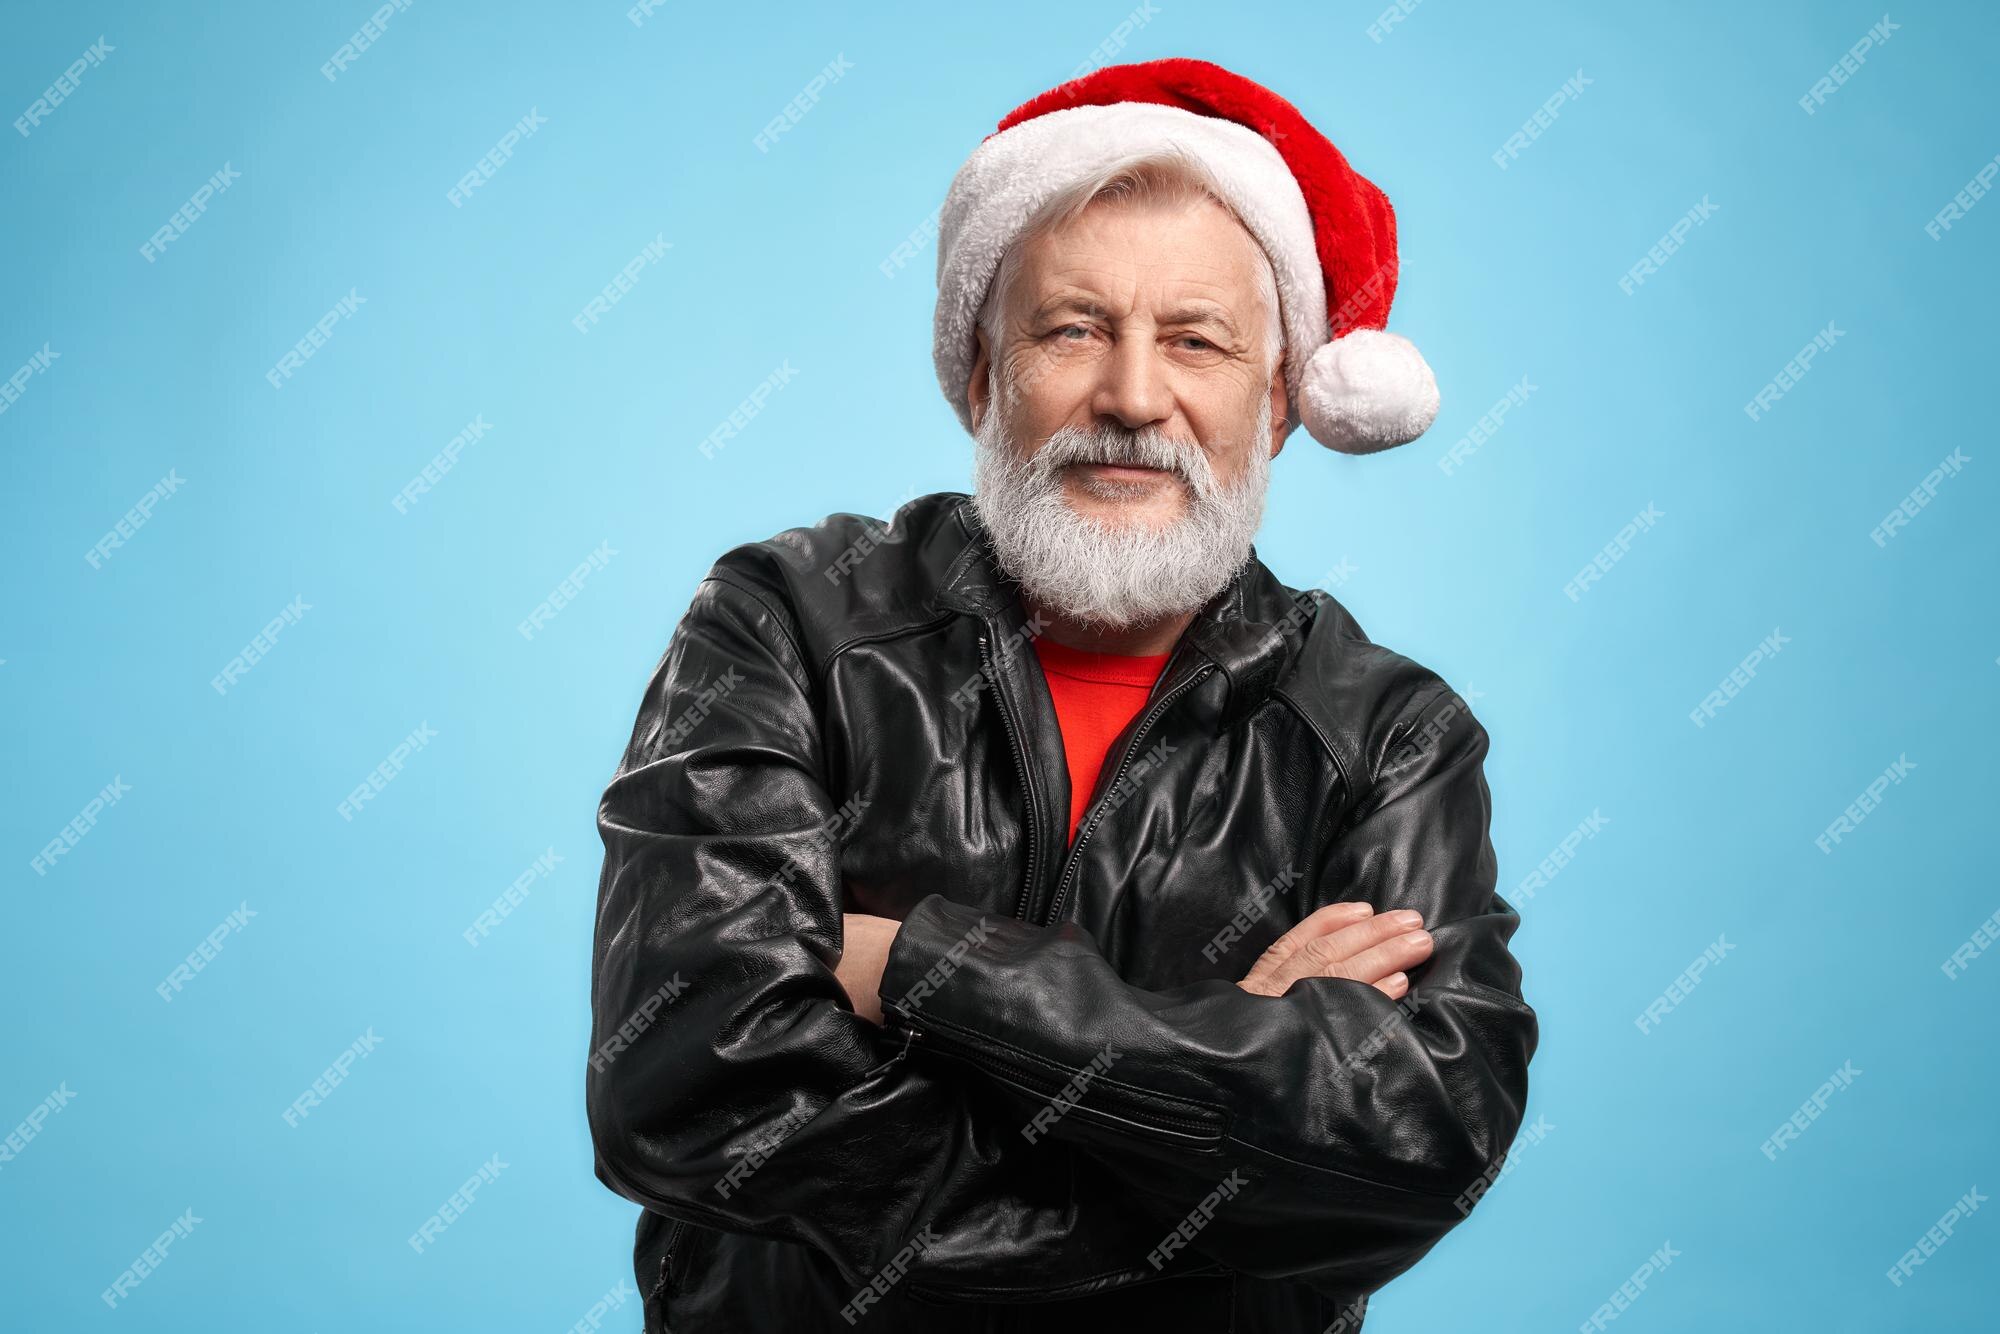 Christmas Old Man Images - Free Download on Freepik